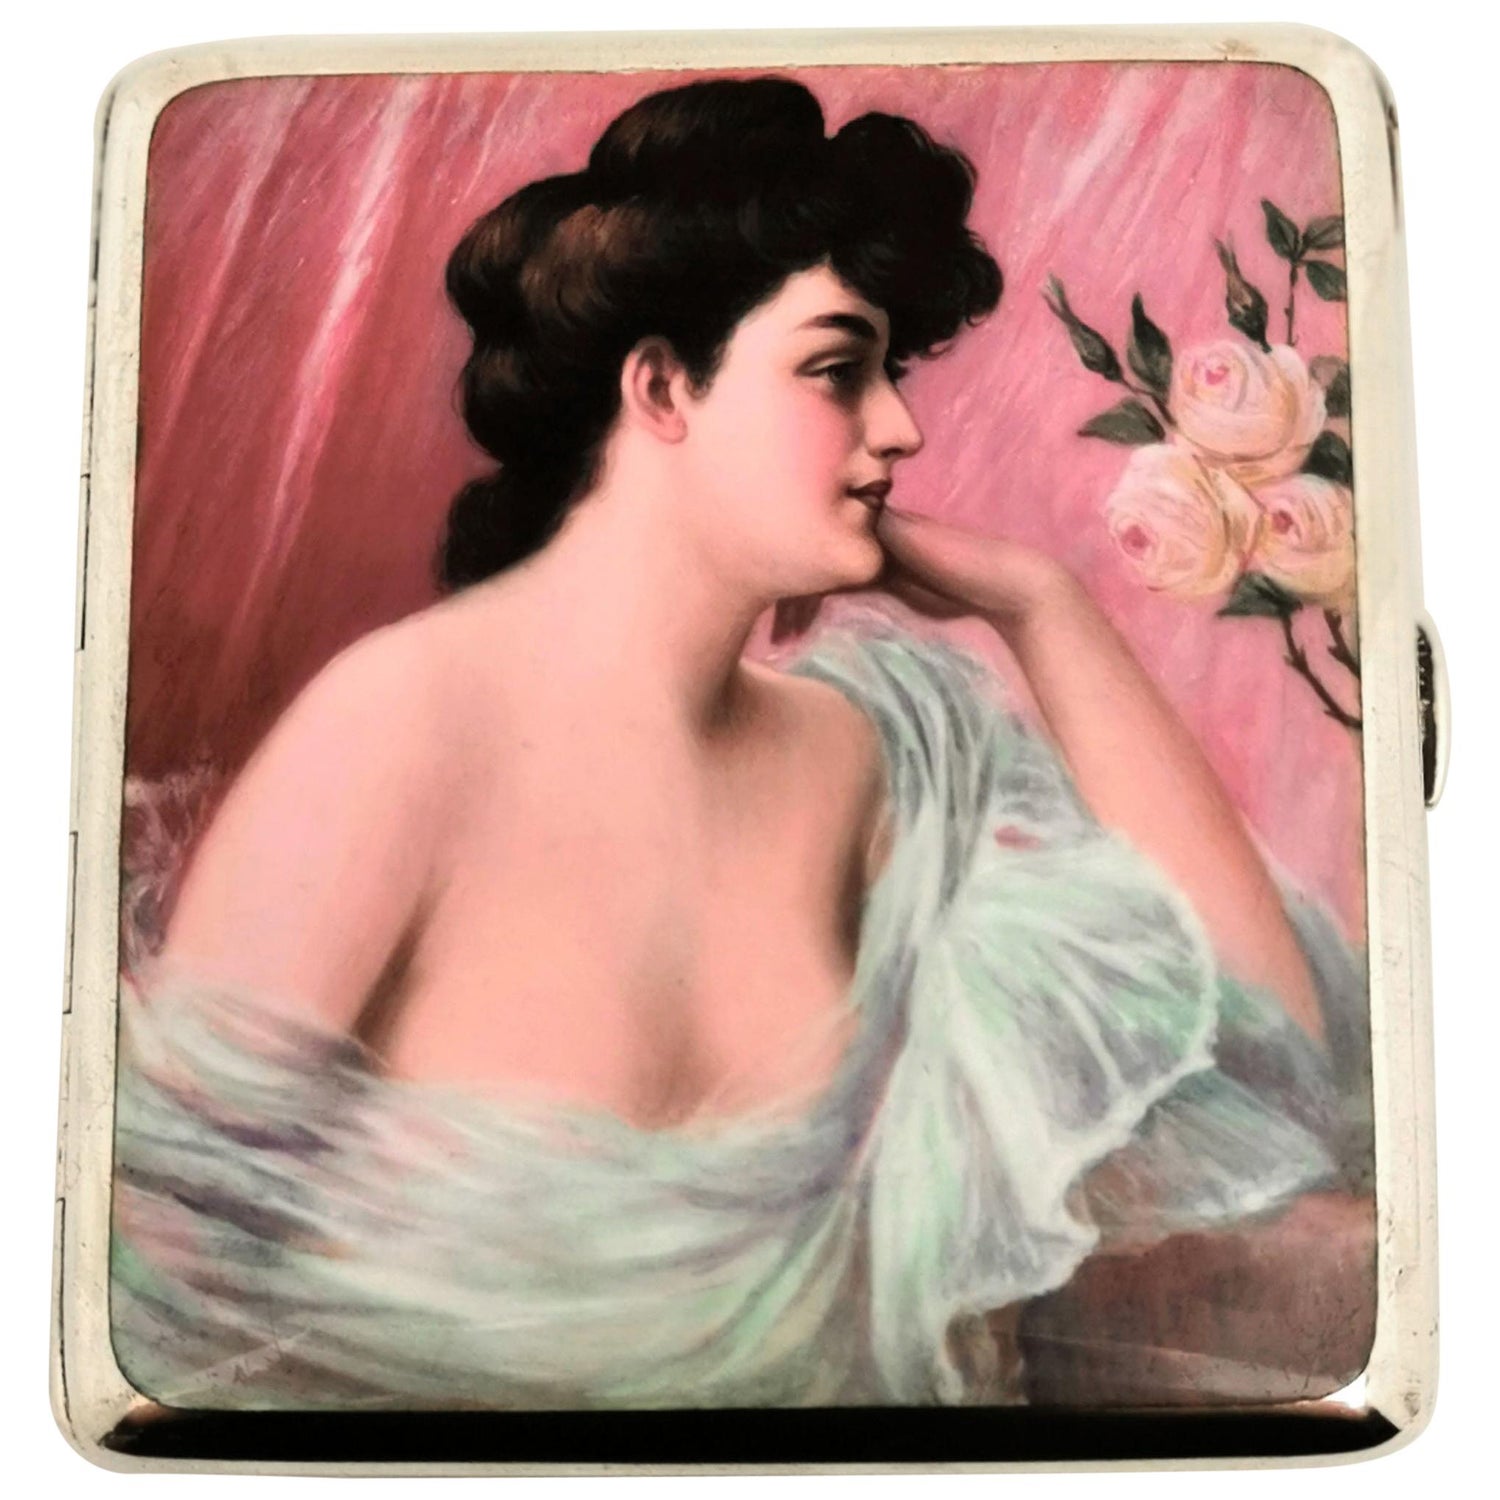 Antique German Solid Silver and Enamel Erotic Cigarette Case c. 1900